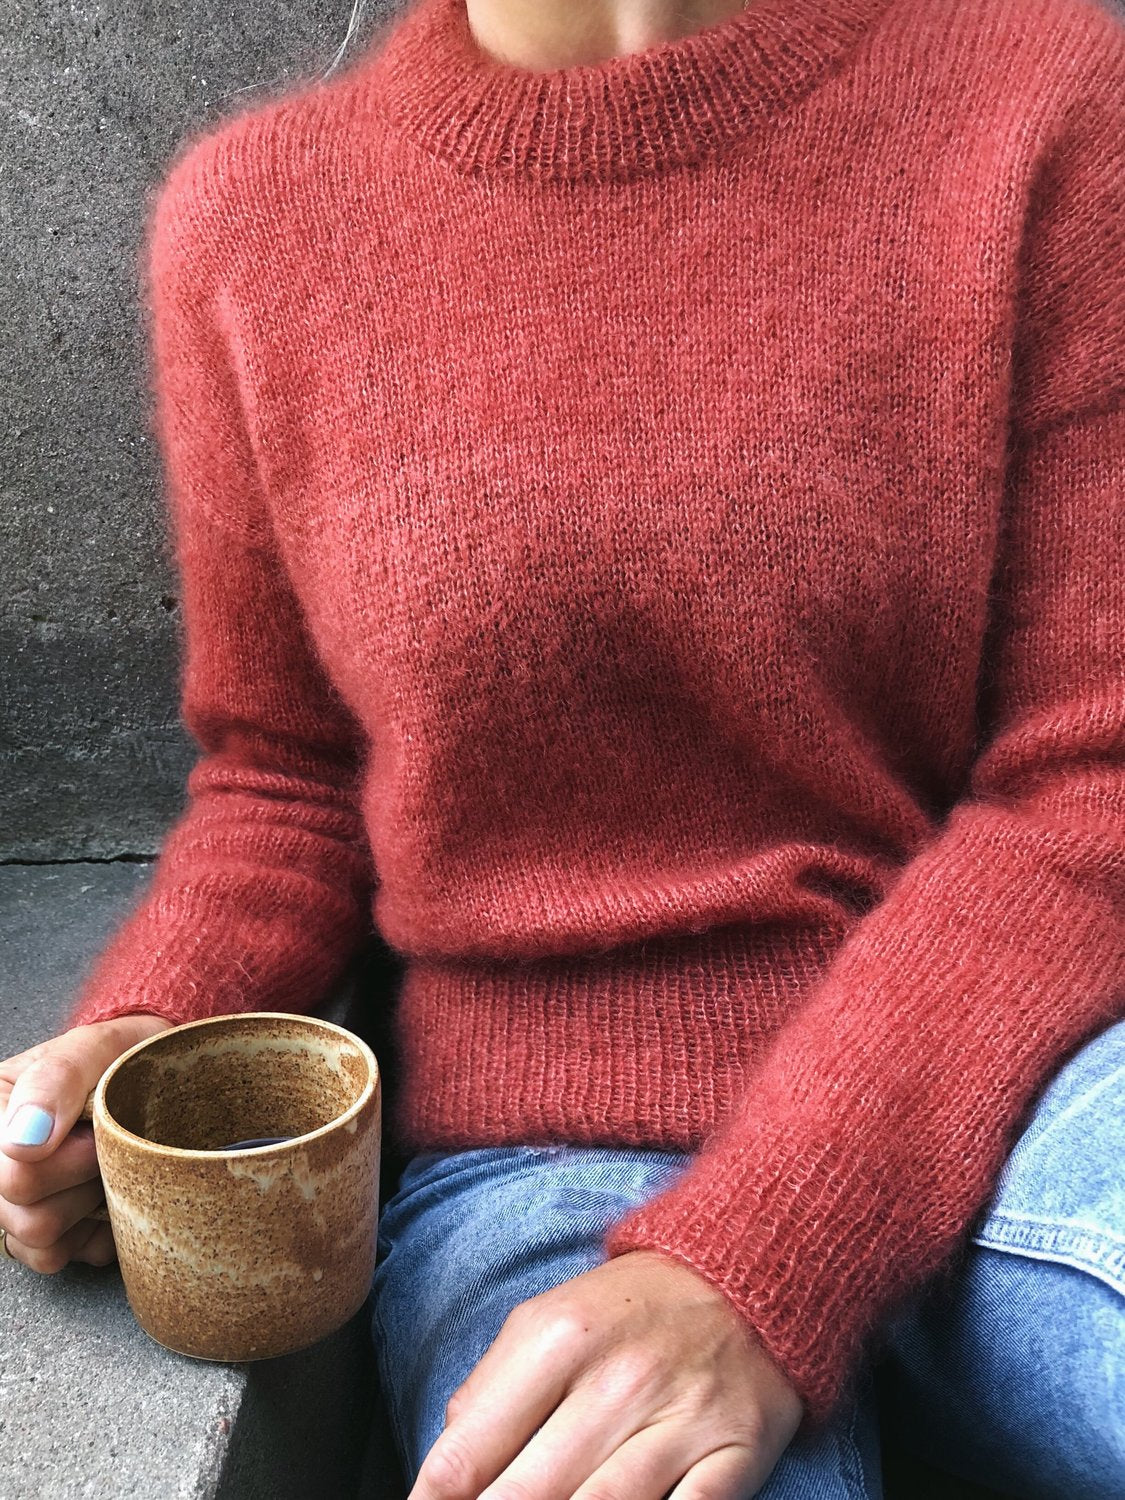 Stockholm Sweater PetiteKnit - Strickpaket Mohair